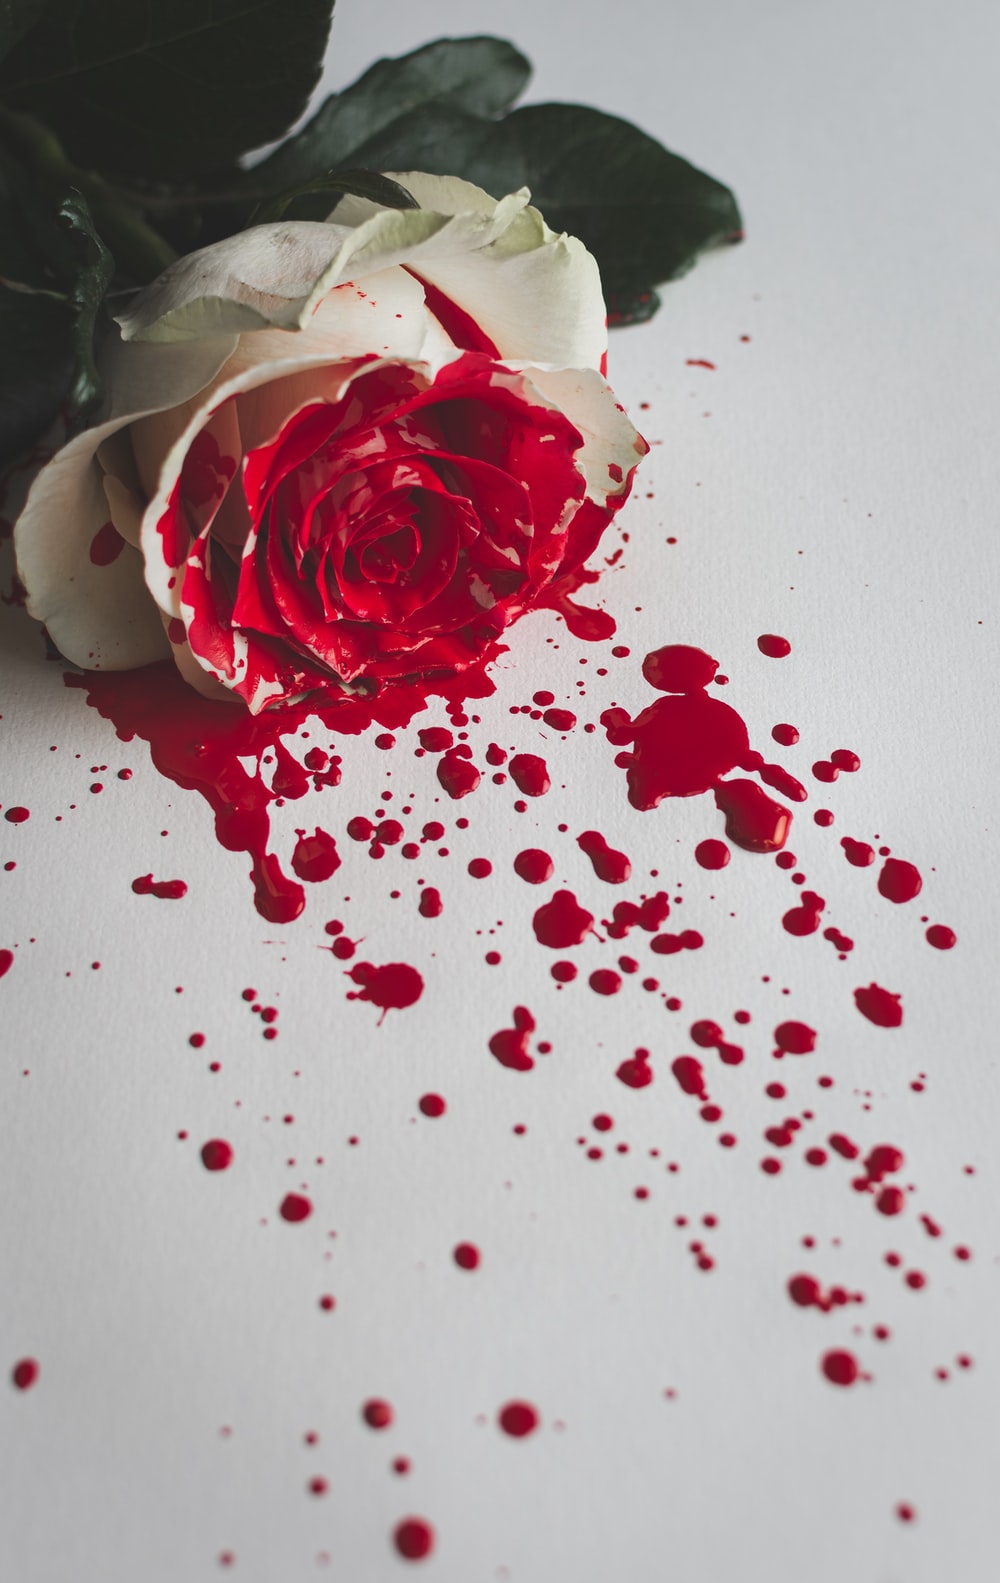 Blood Splatter Picture. Download Free Image